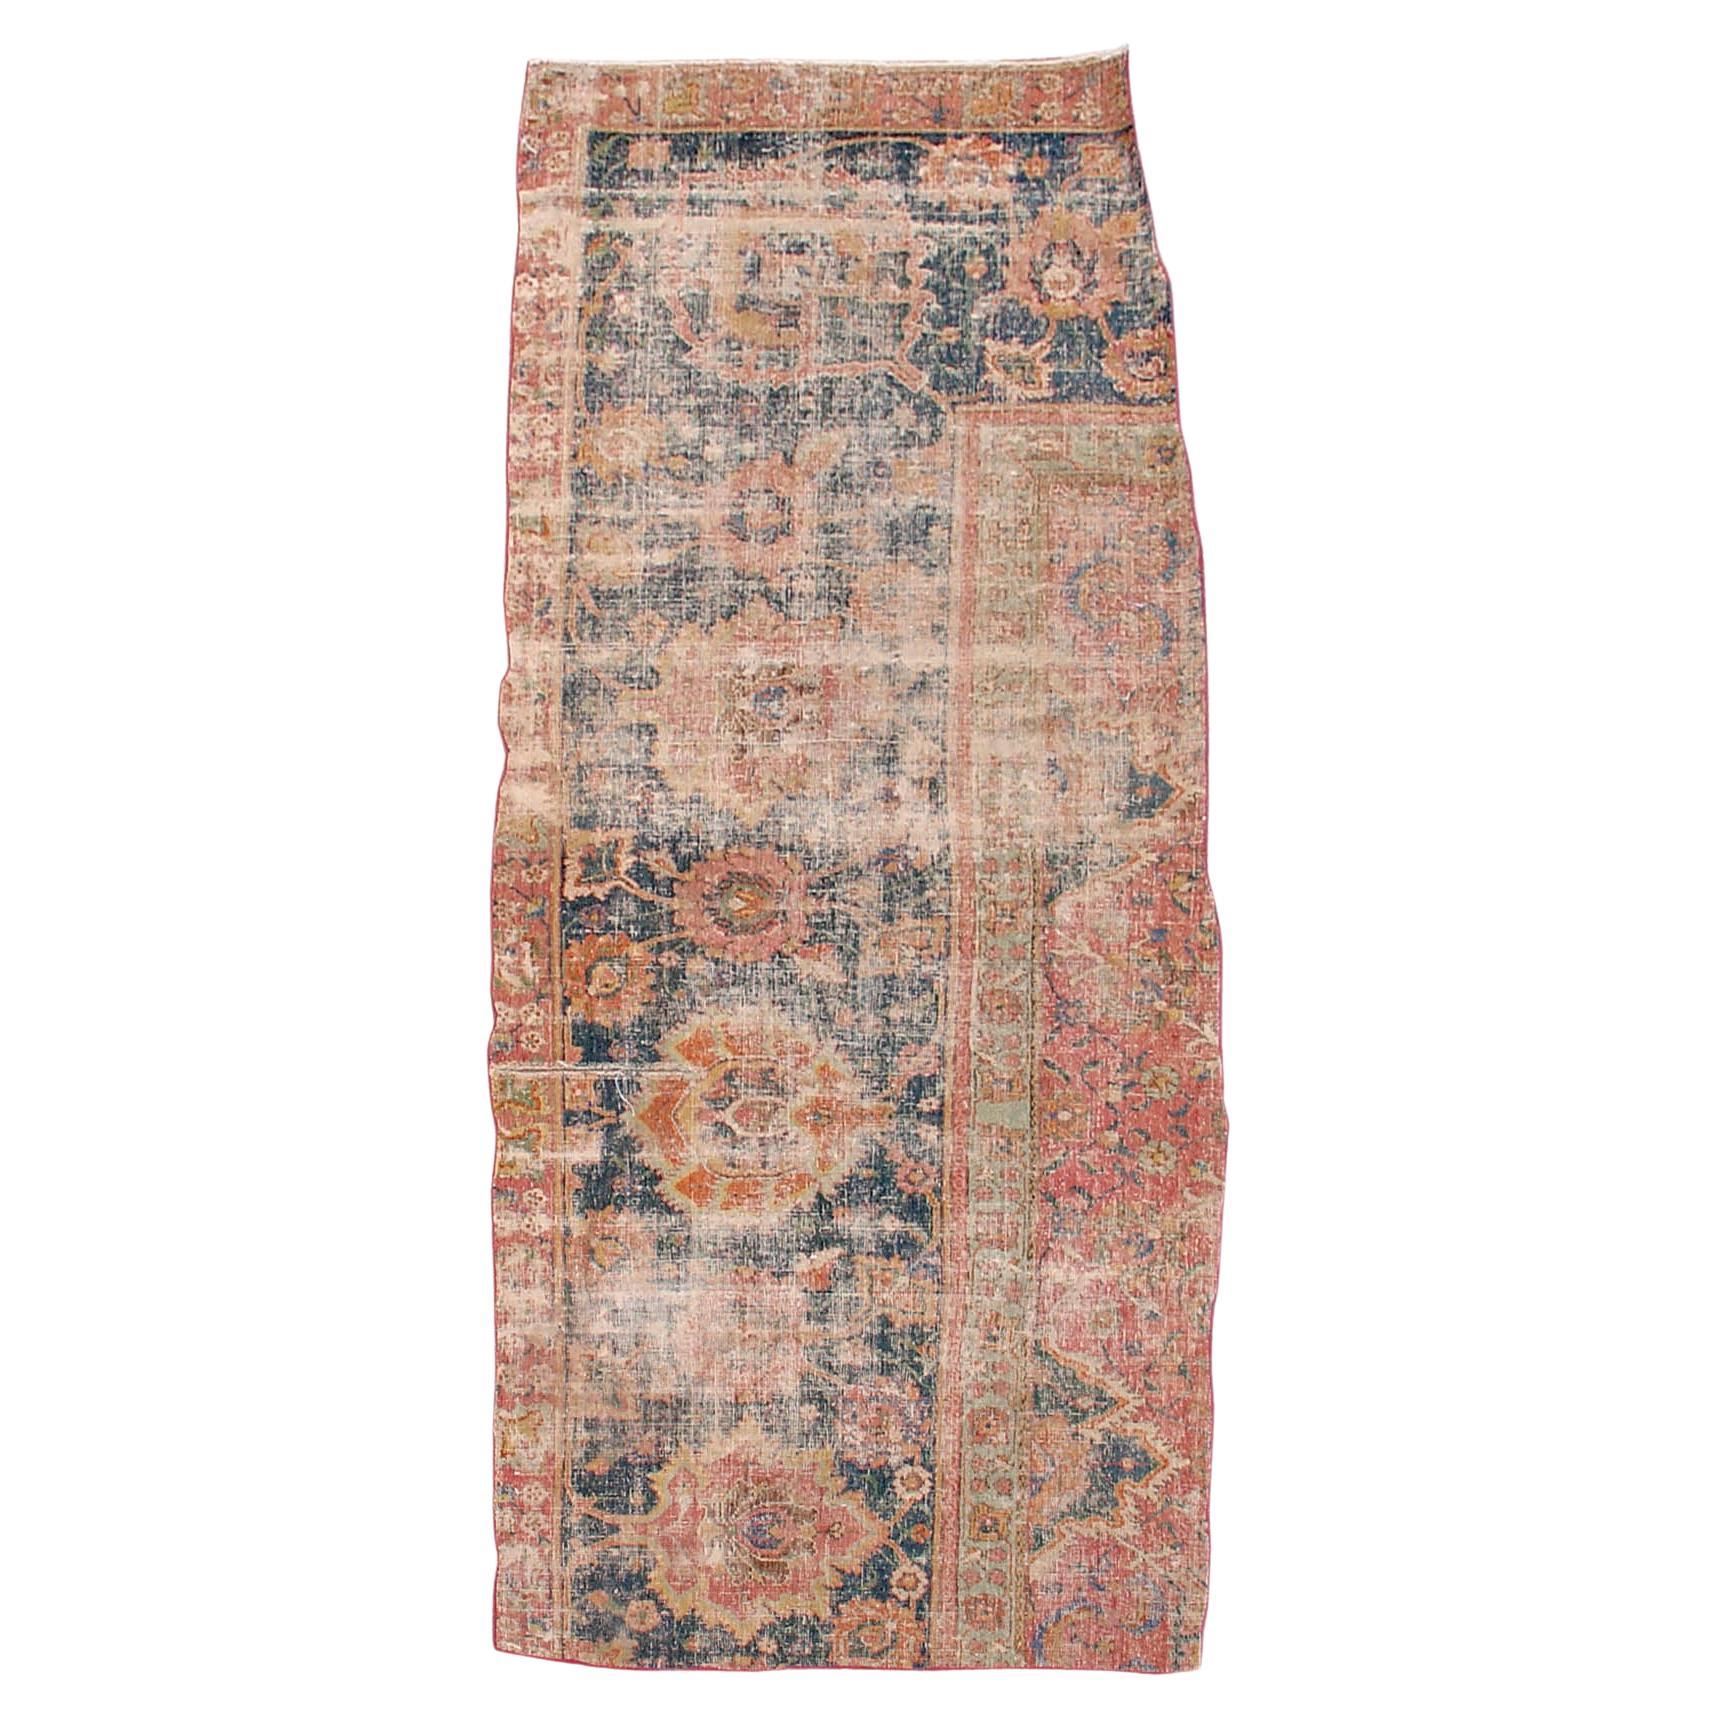 Tapis fragment de tapis d'Ispahan, 17ème siècle